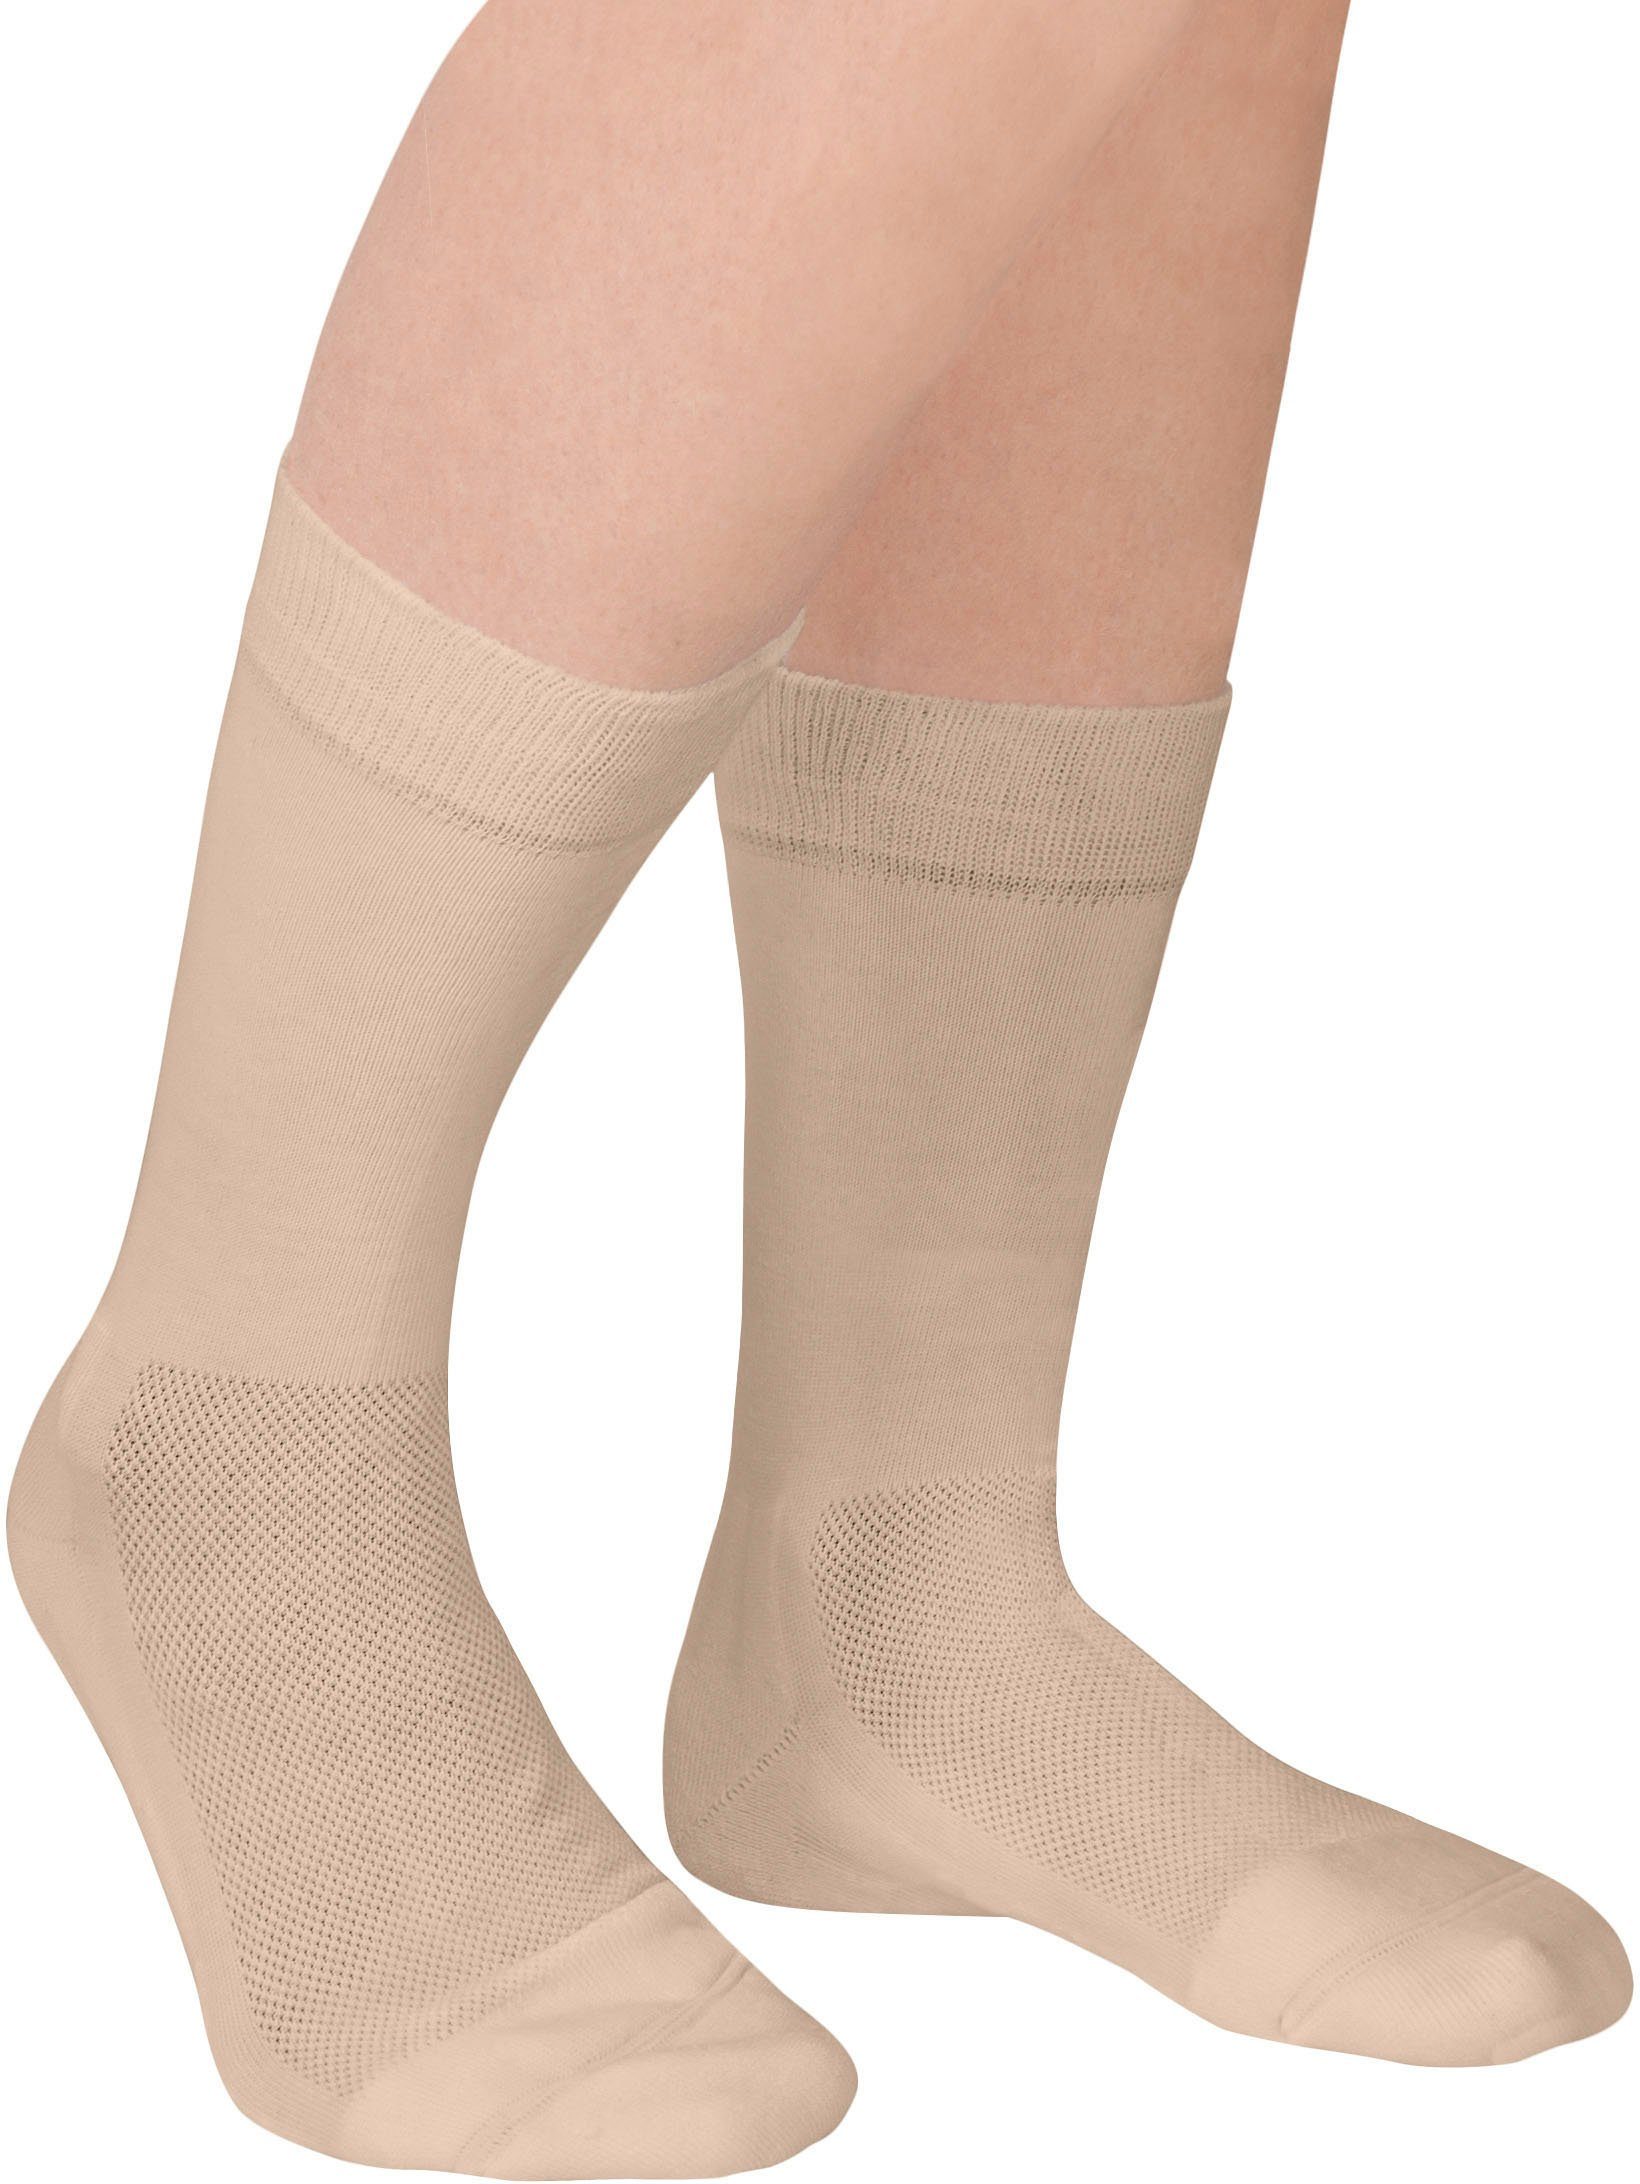 Fußgut Diabetikersocken Venenfeund Sensitiv Socken (2-Paar) beige | Diabetikerstrümpfe